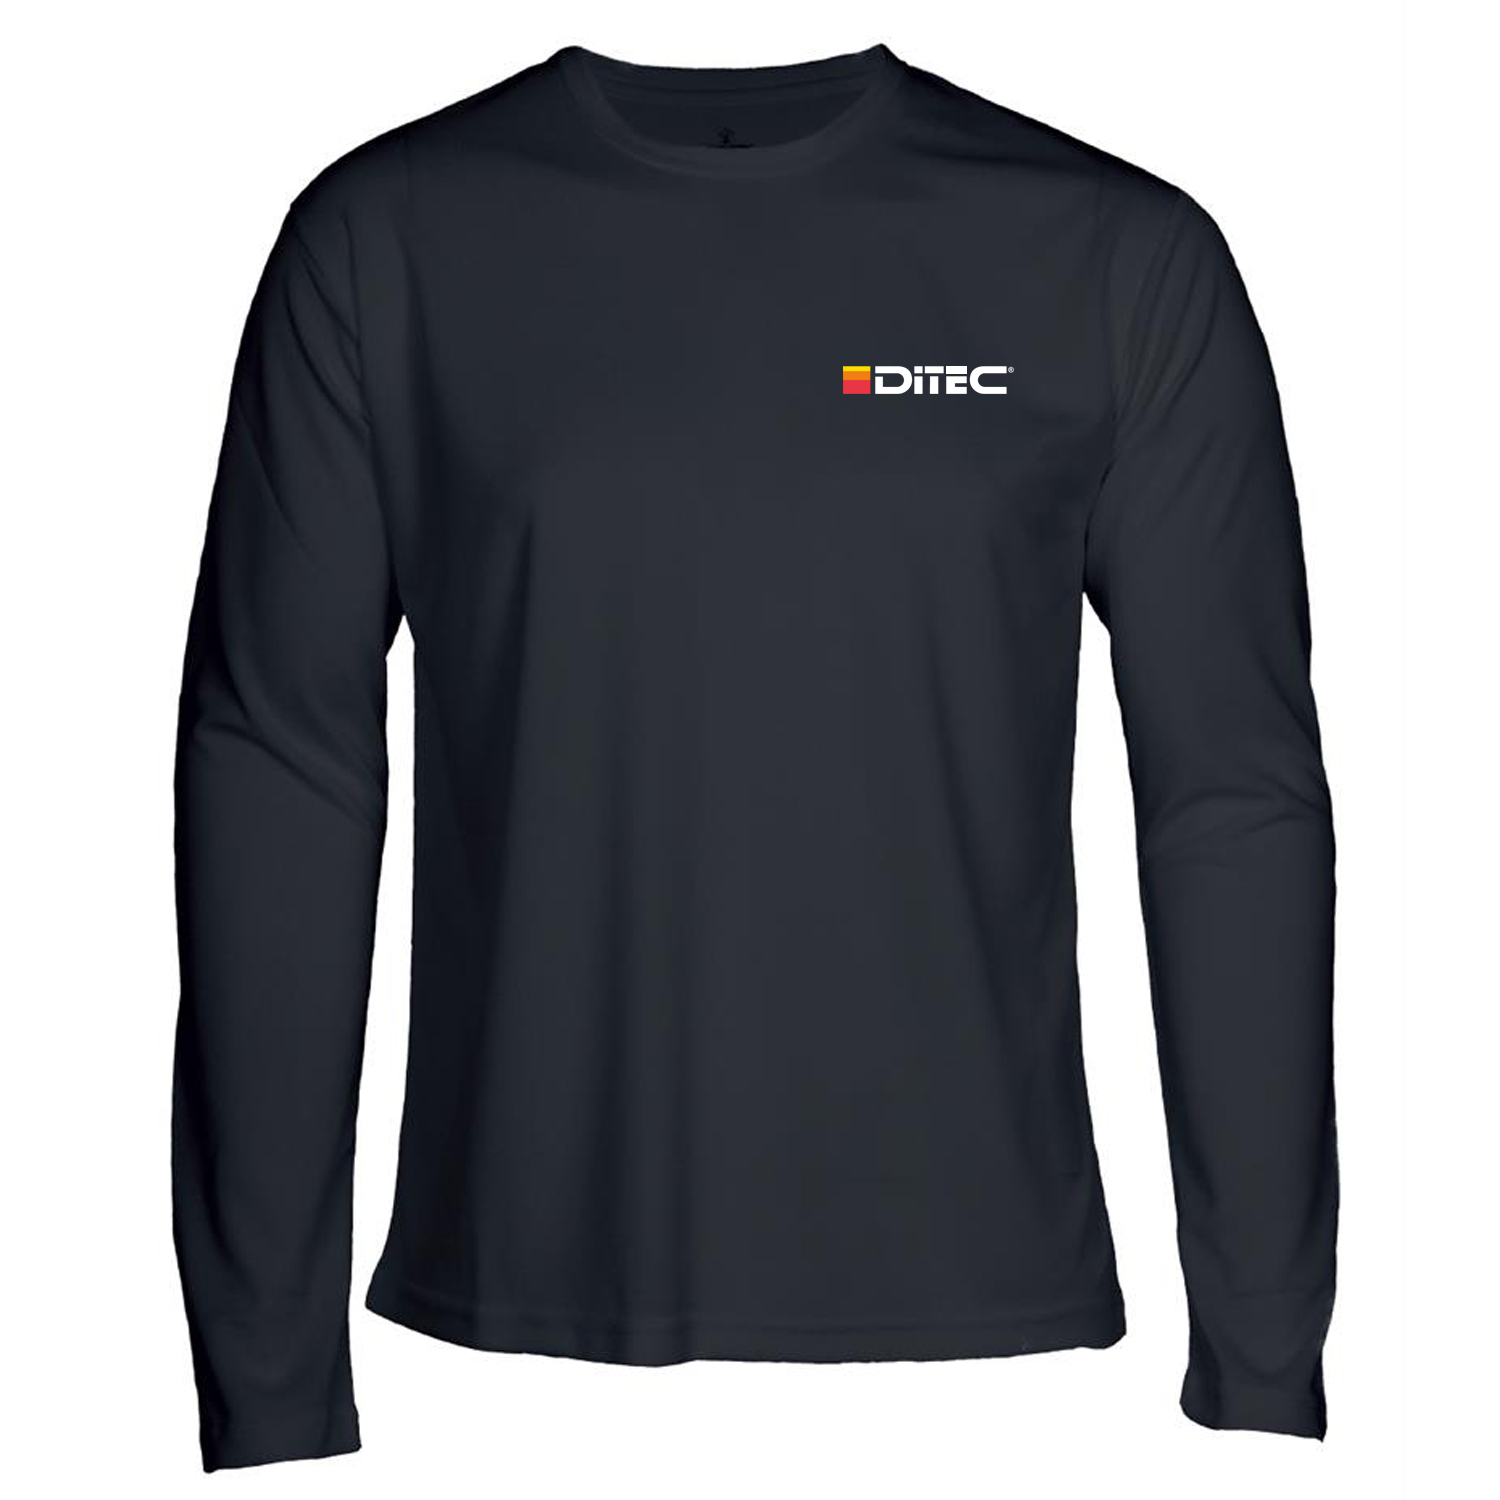 Functional T-Shirt, long sleeve, unisex, Black or Orange.